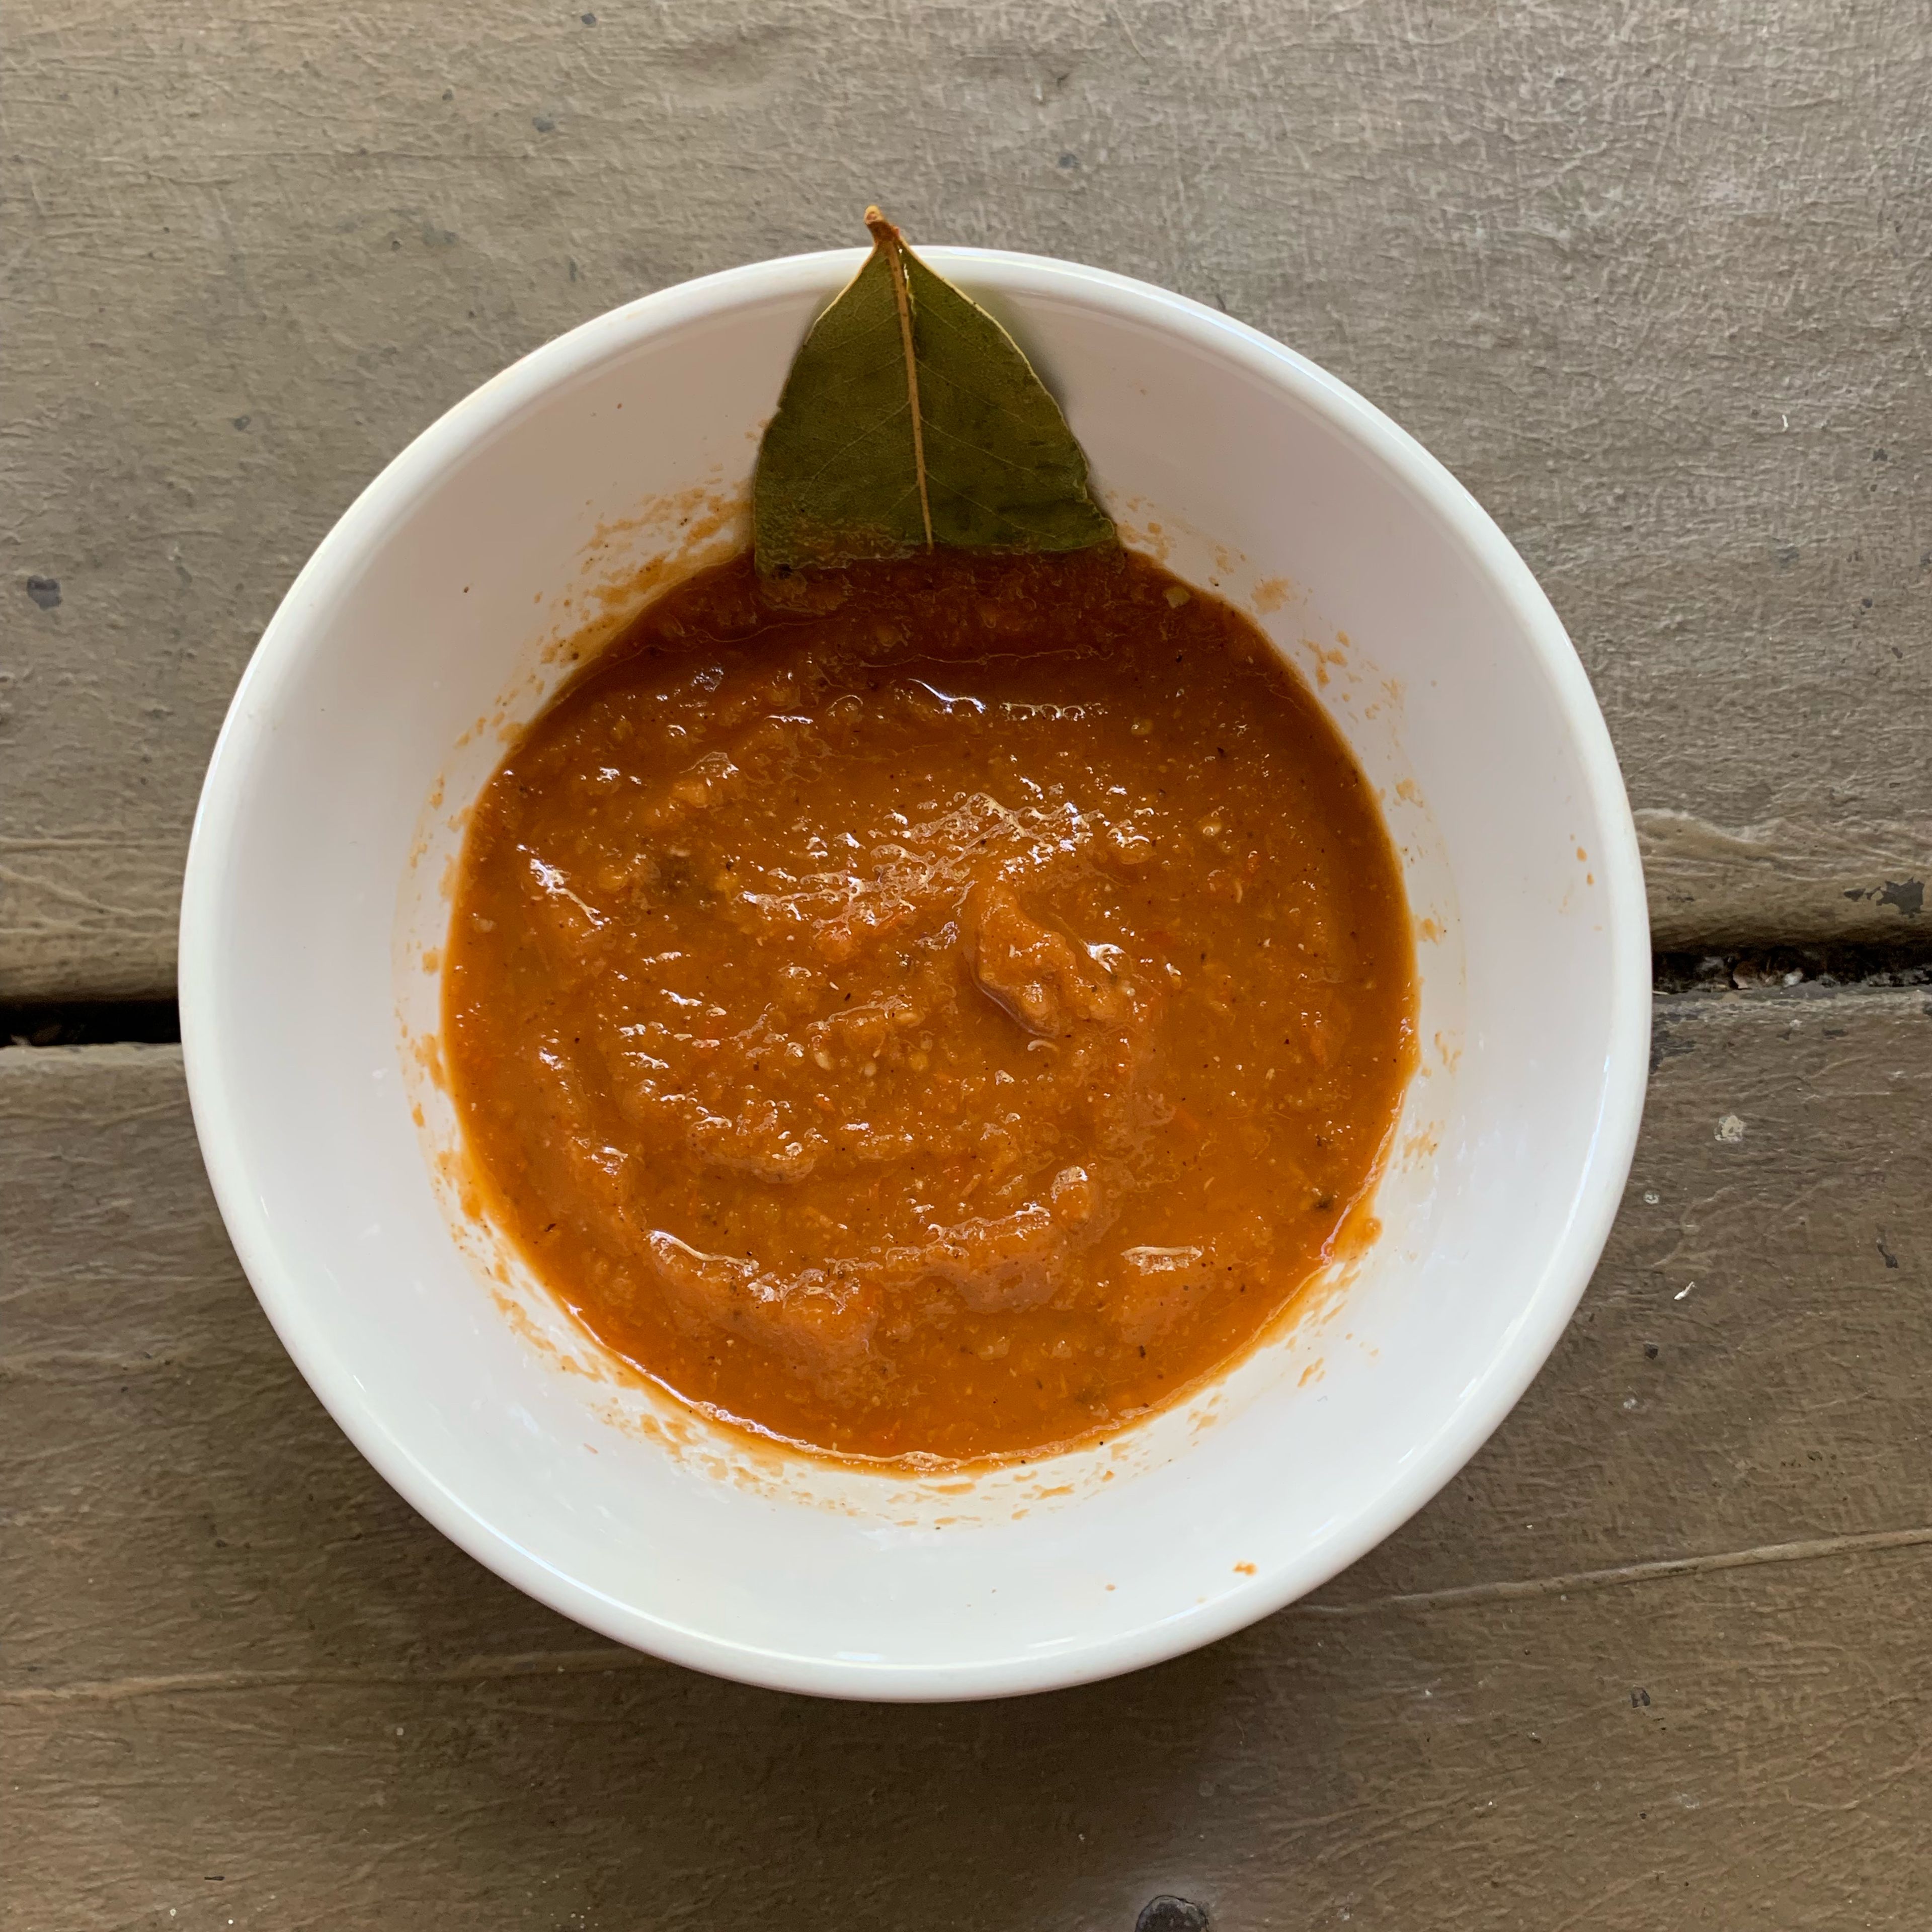 Homemade Mexican hot sauce